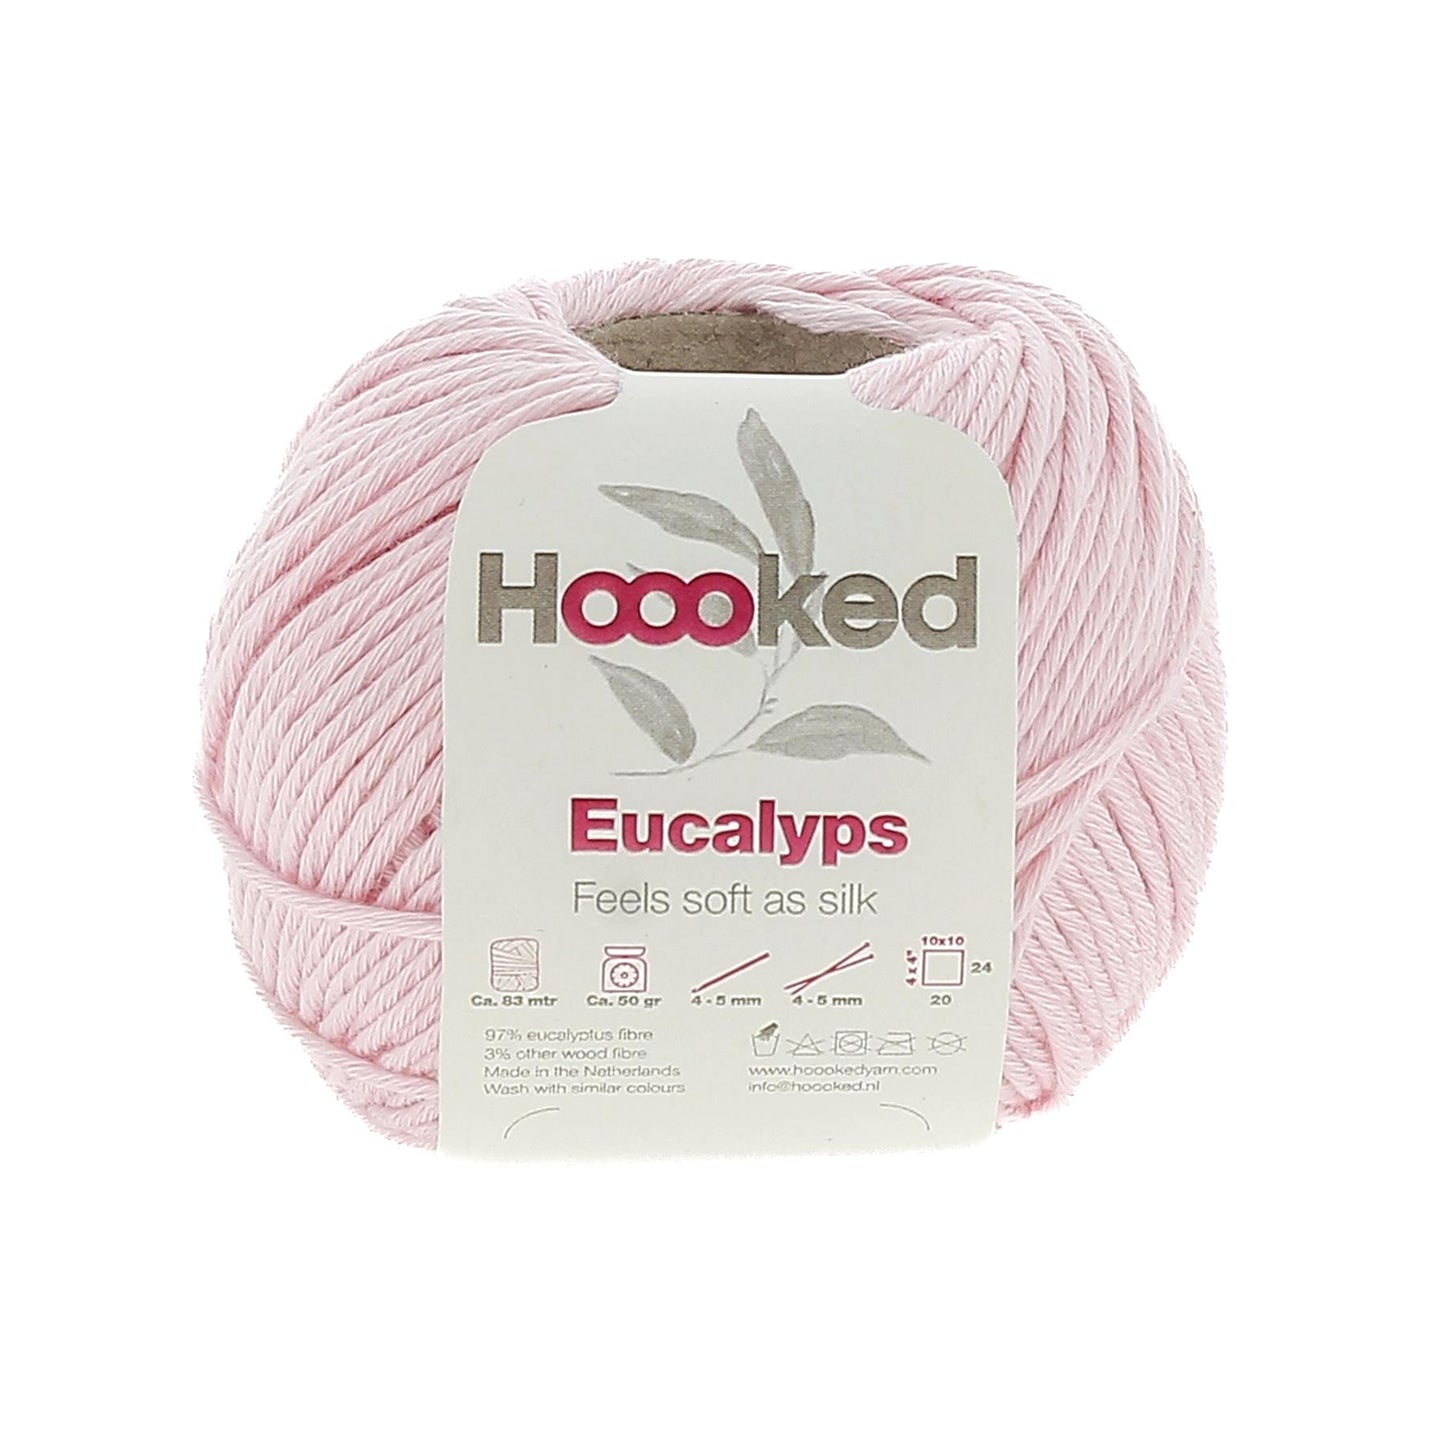 [Hoooked] EC0650G Eucalyps Pastello Pink Eucalyptus Yarn - 82.5M, 50g